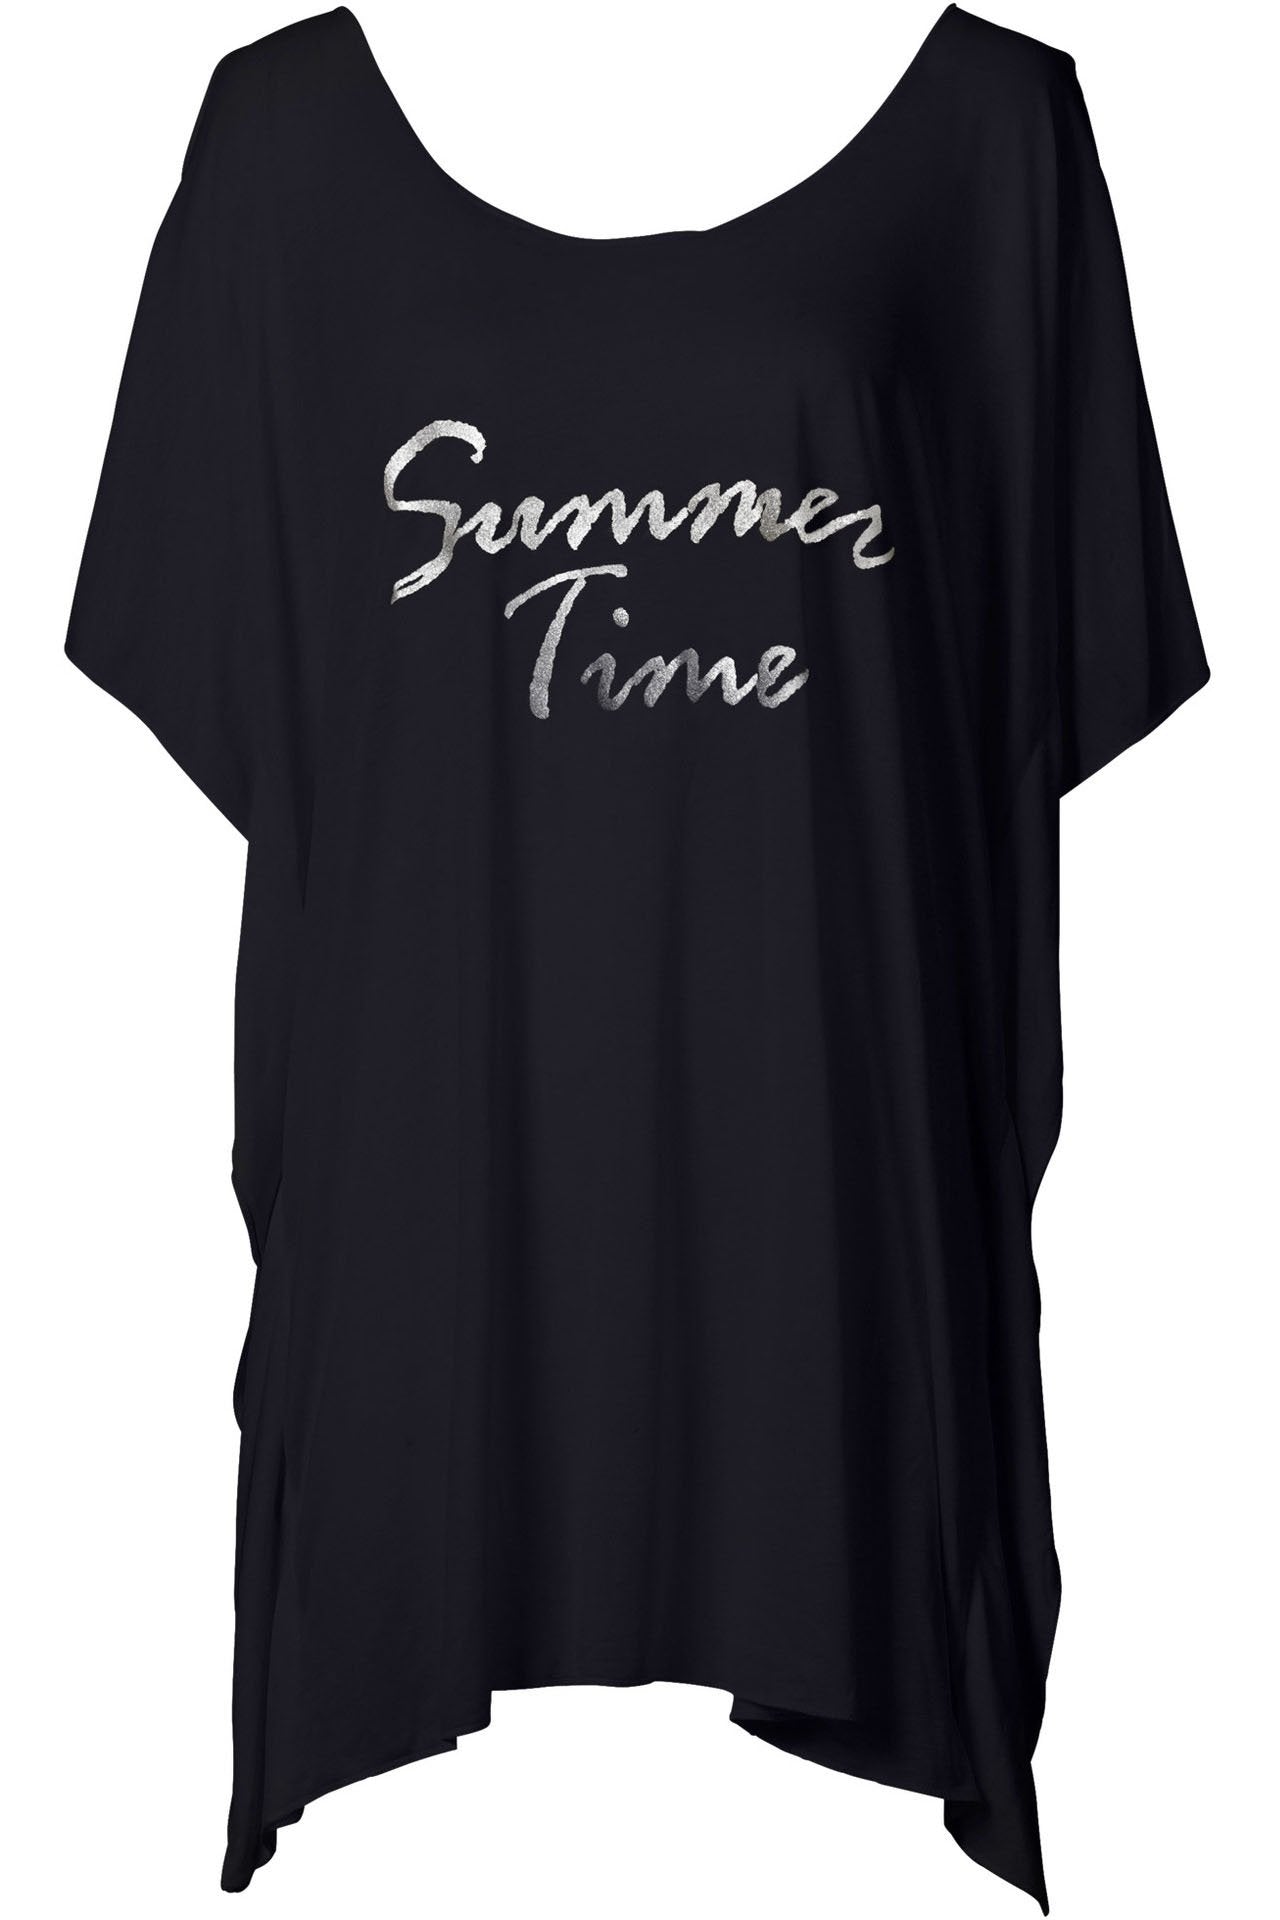 Black Cold Shoulder Letter Print Asymmetric T Shirt Dress Beach Cover Up